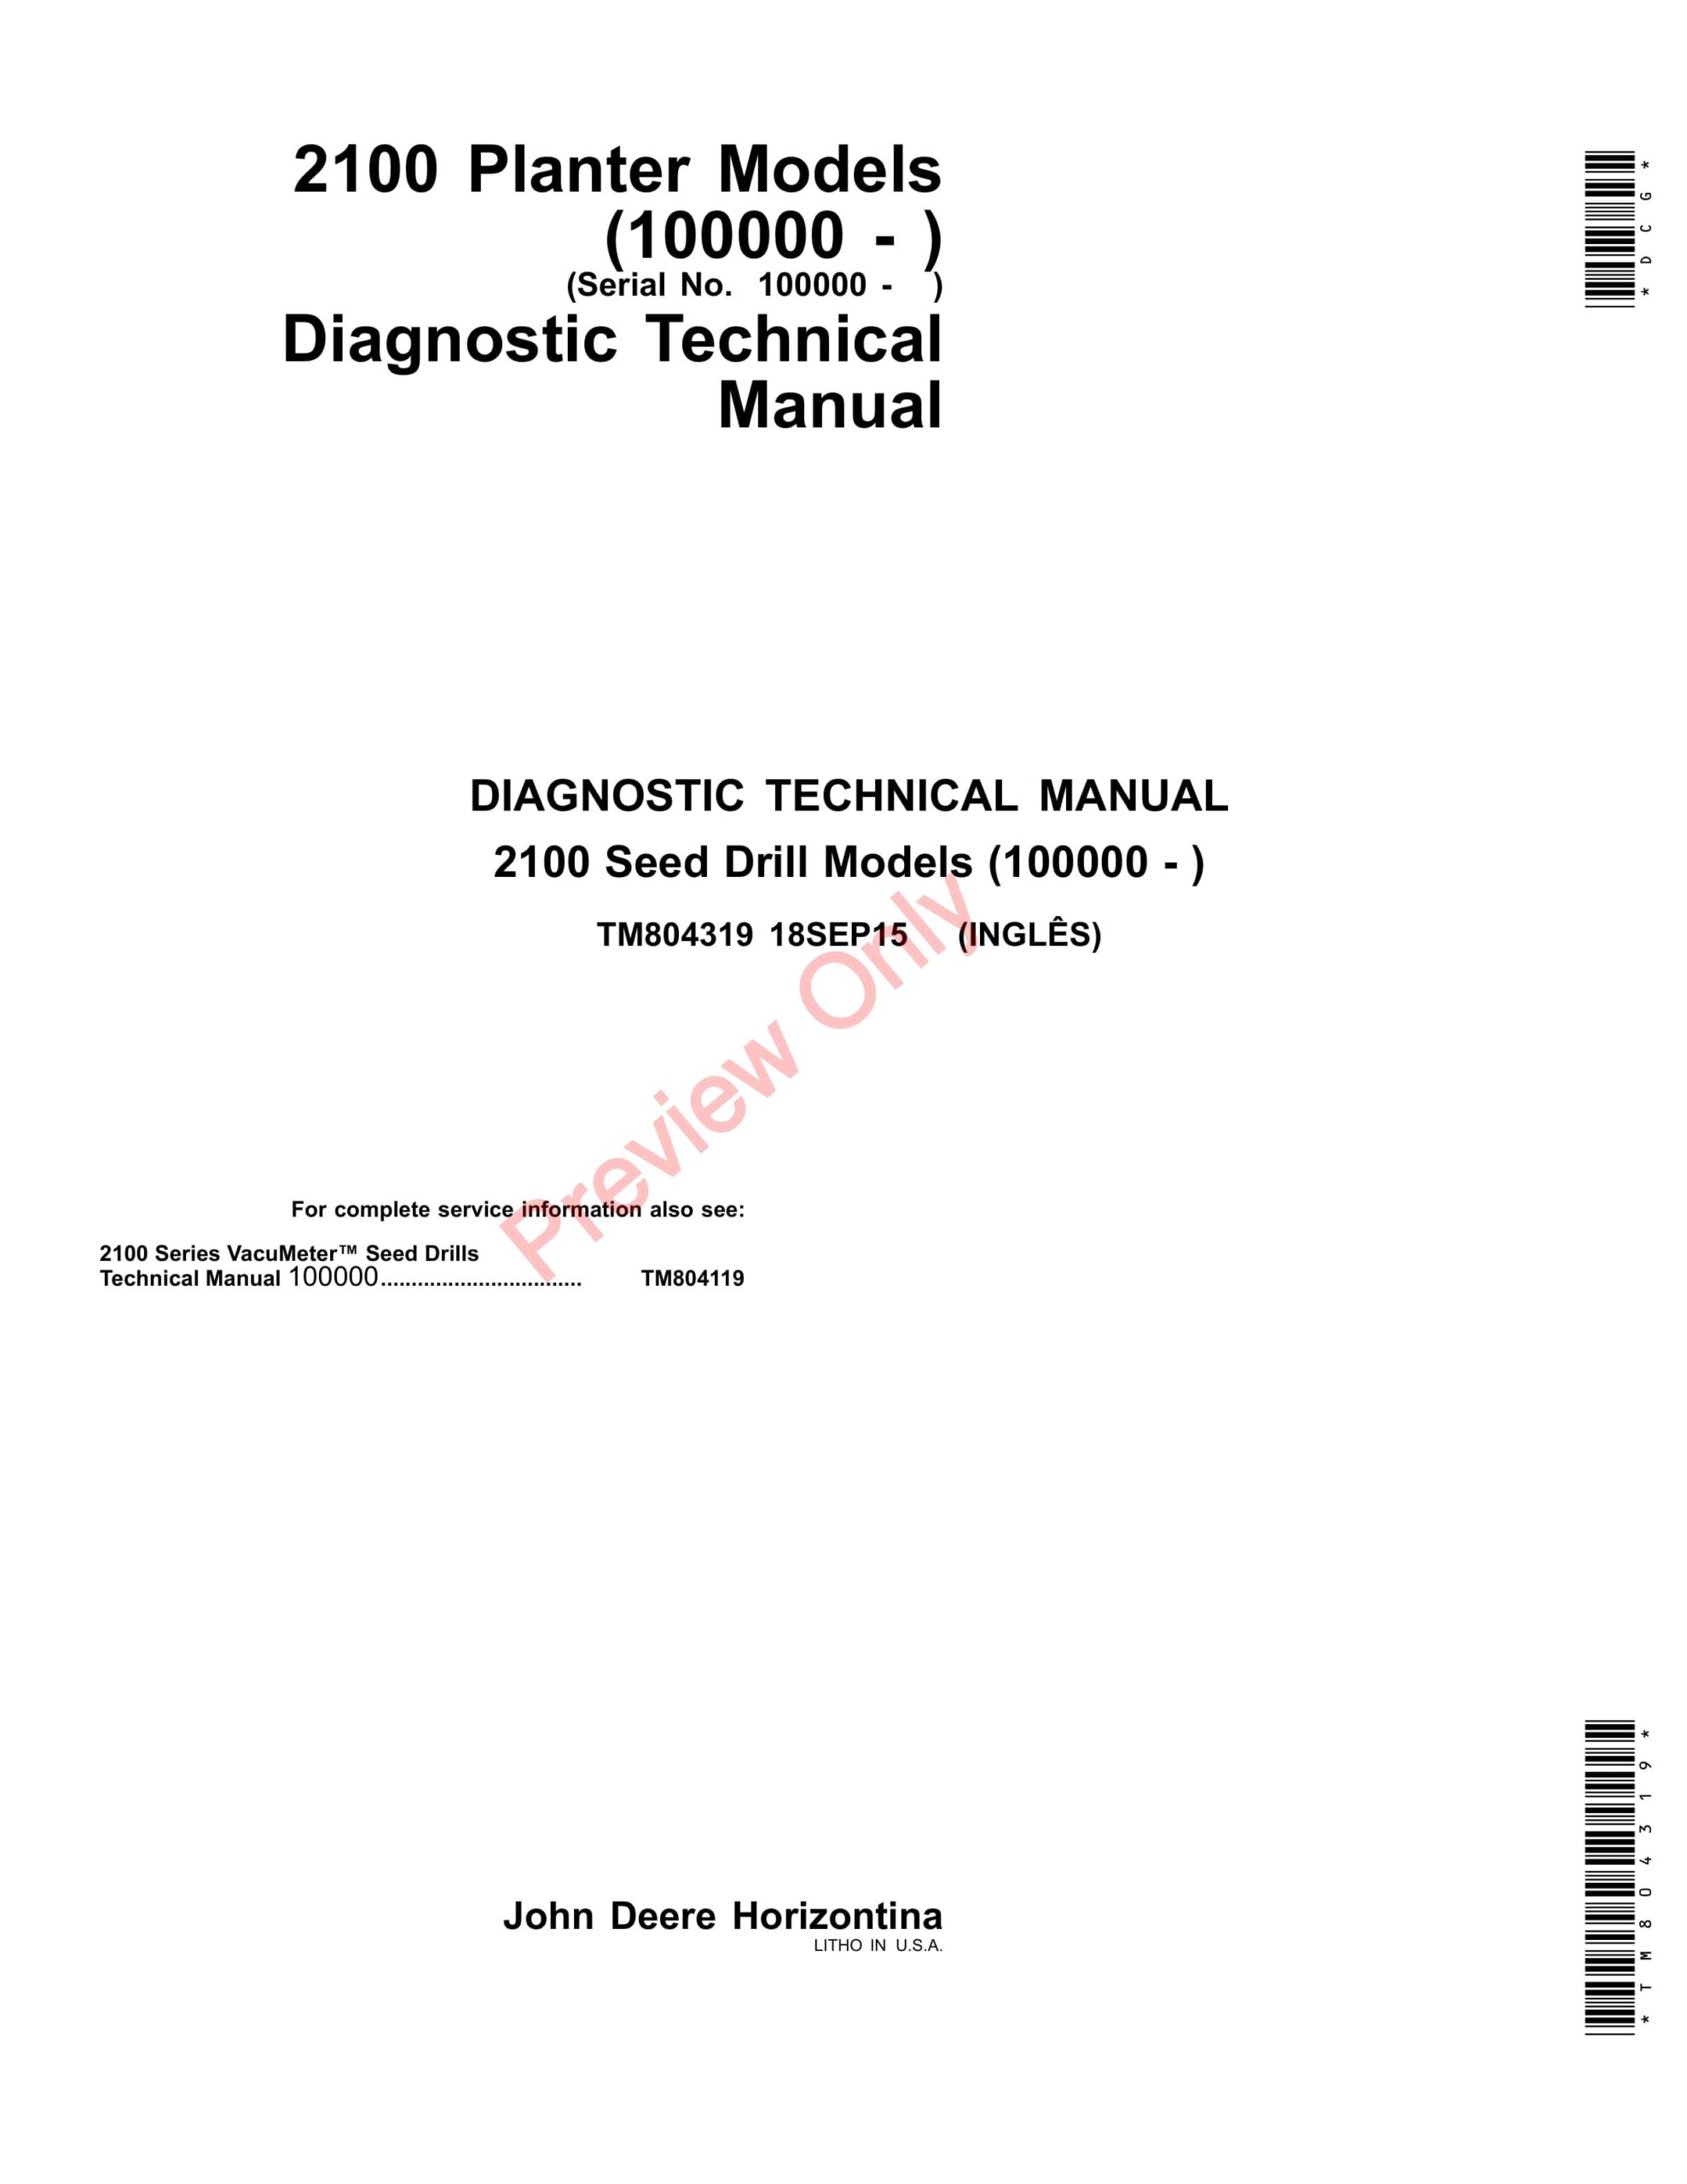 John Deere 2113, 2115, 2117, 2122, 2126, 2130 and 2134 Planters Diagnostic Technical Manual TM804319 15AUG17-1